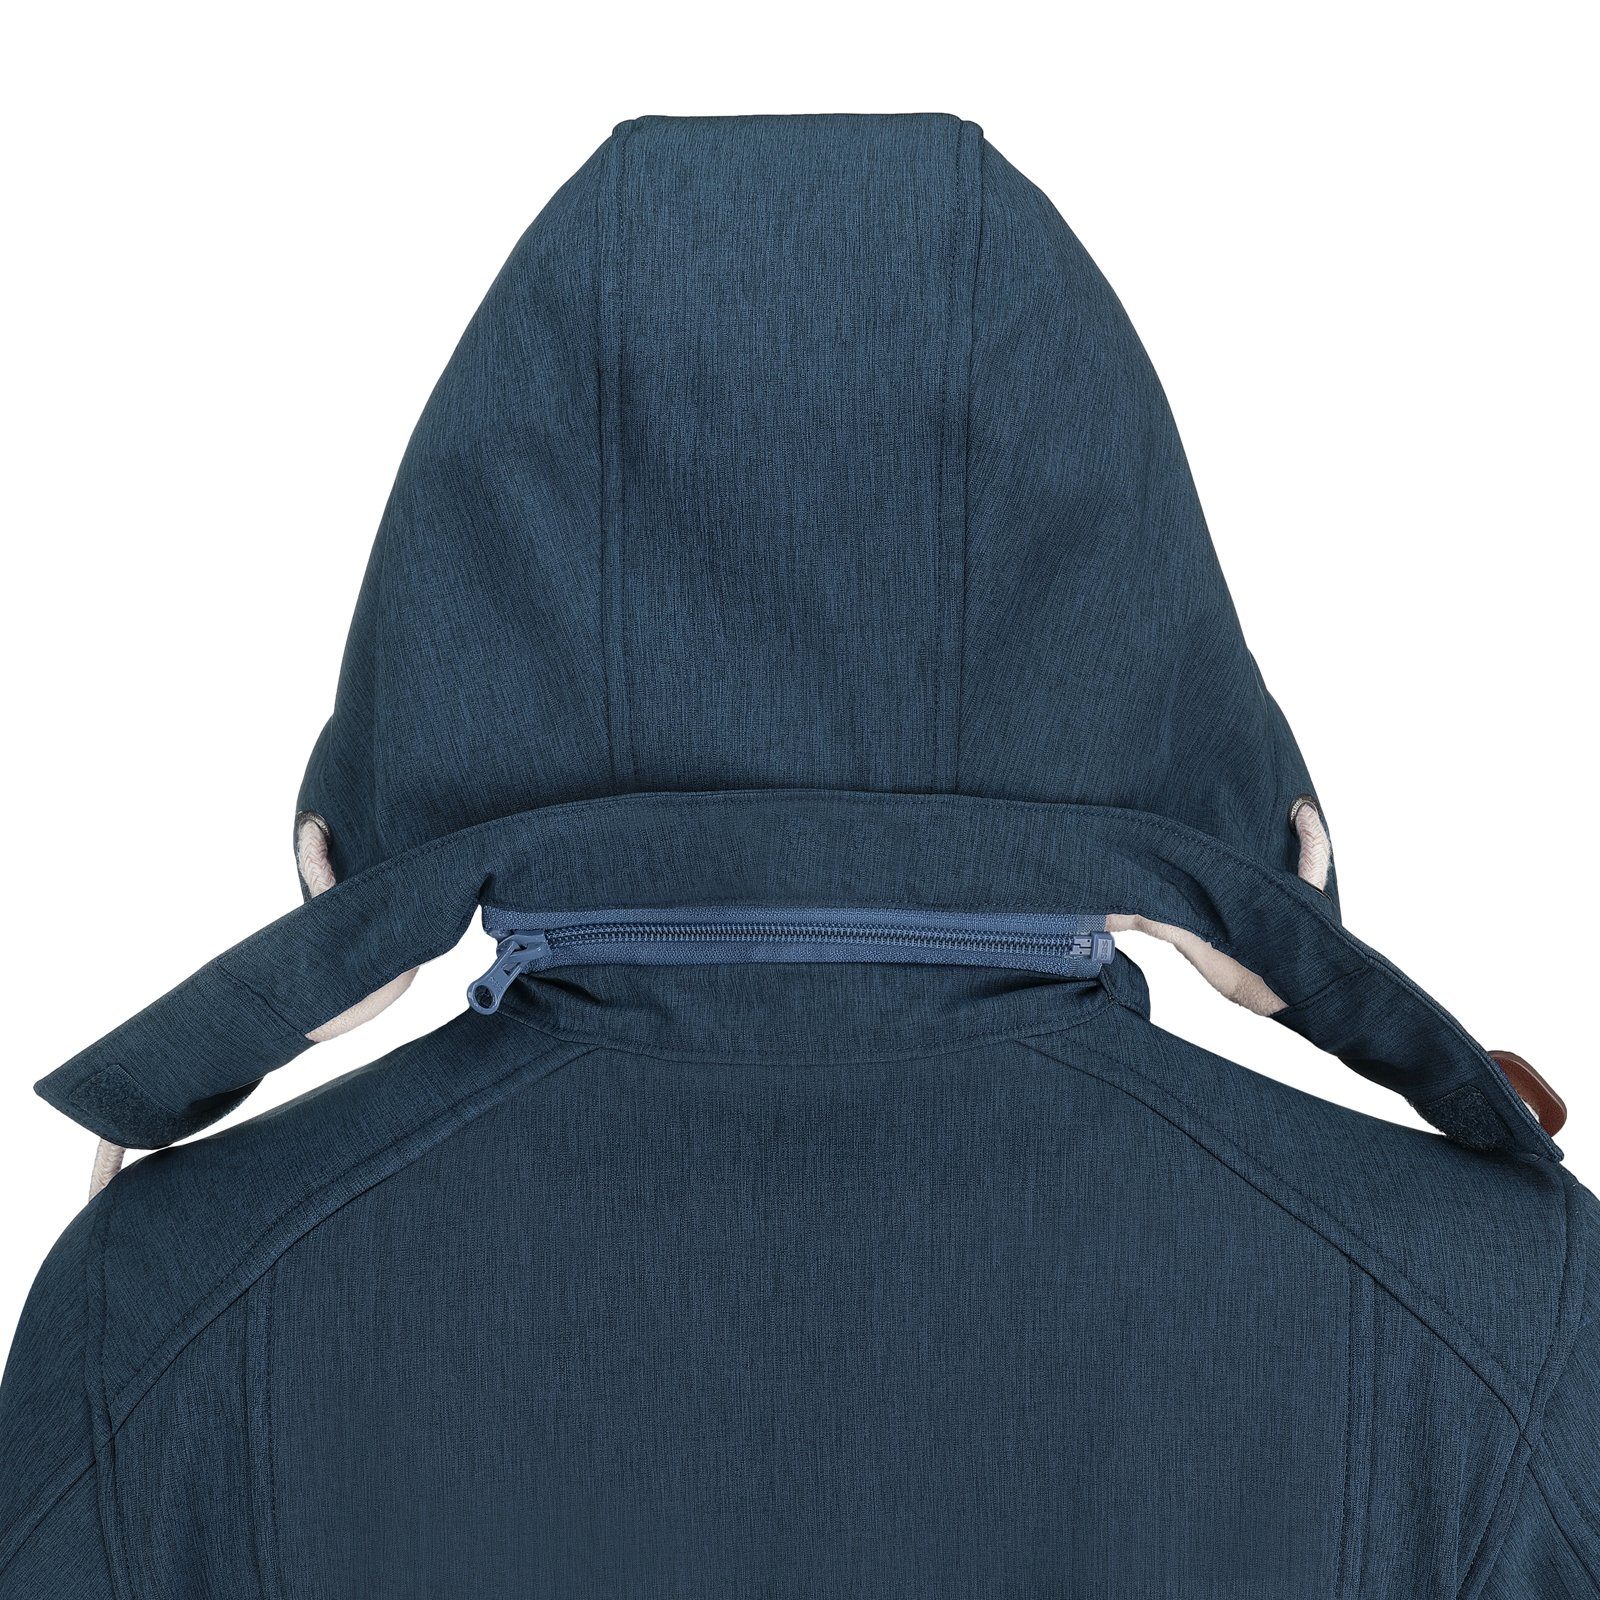 Dry - & Kapuze navy Jacke meliert Softshelljacke melange Damen atmungsaktiv Damp Fashion mit wasserabweisend